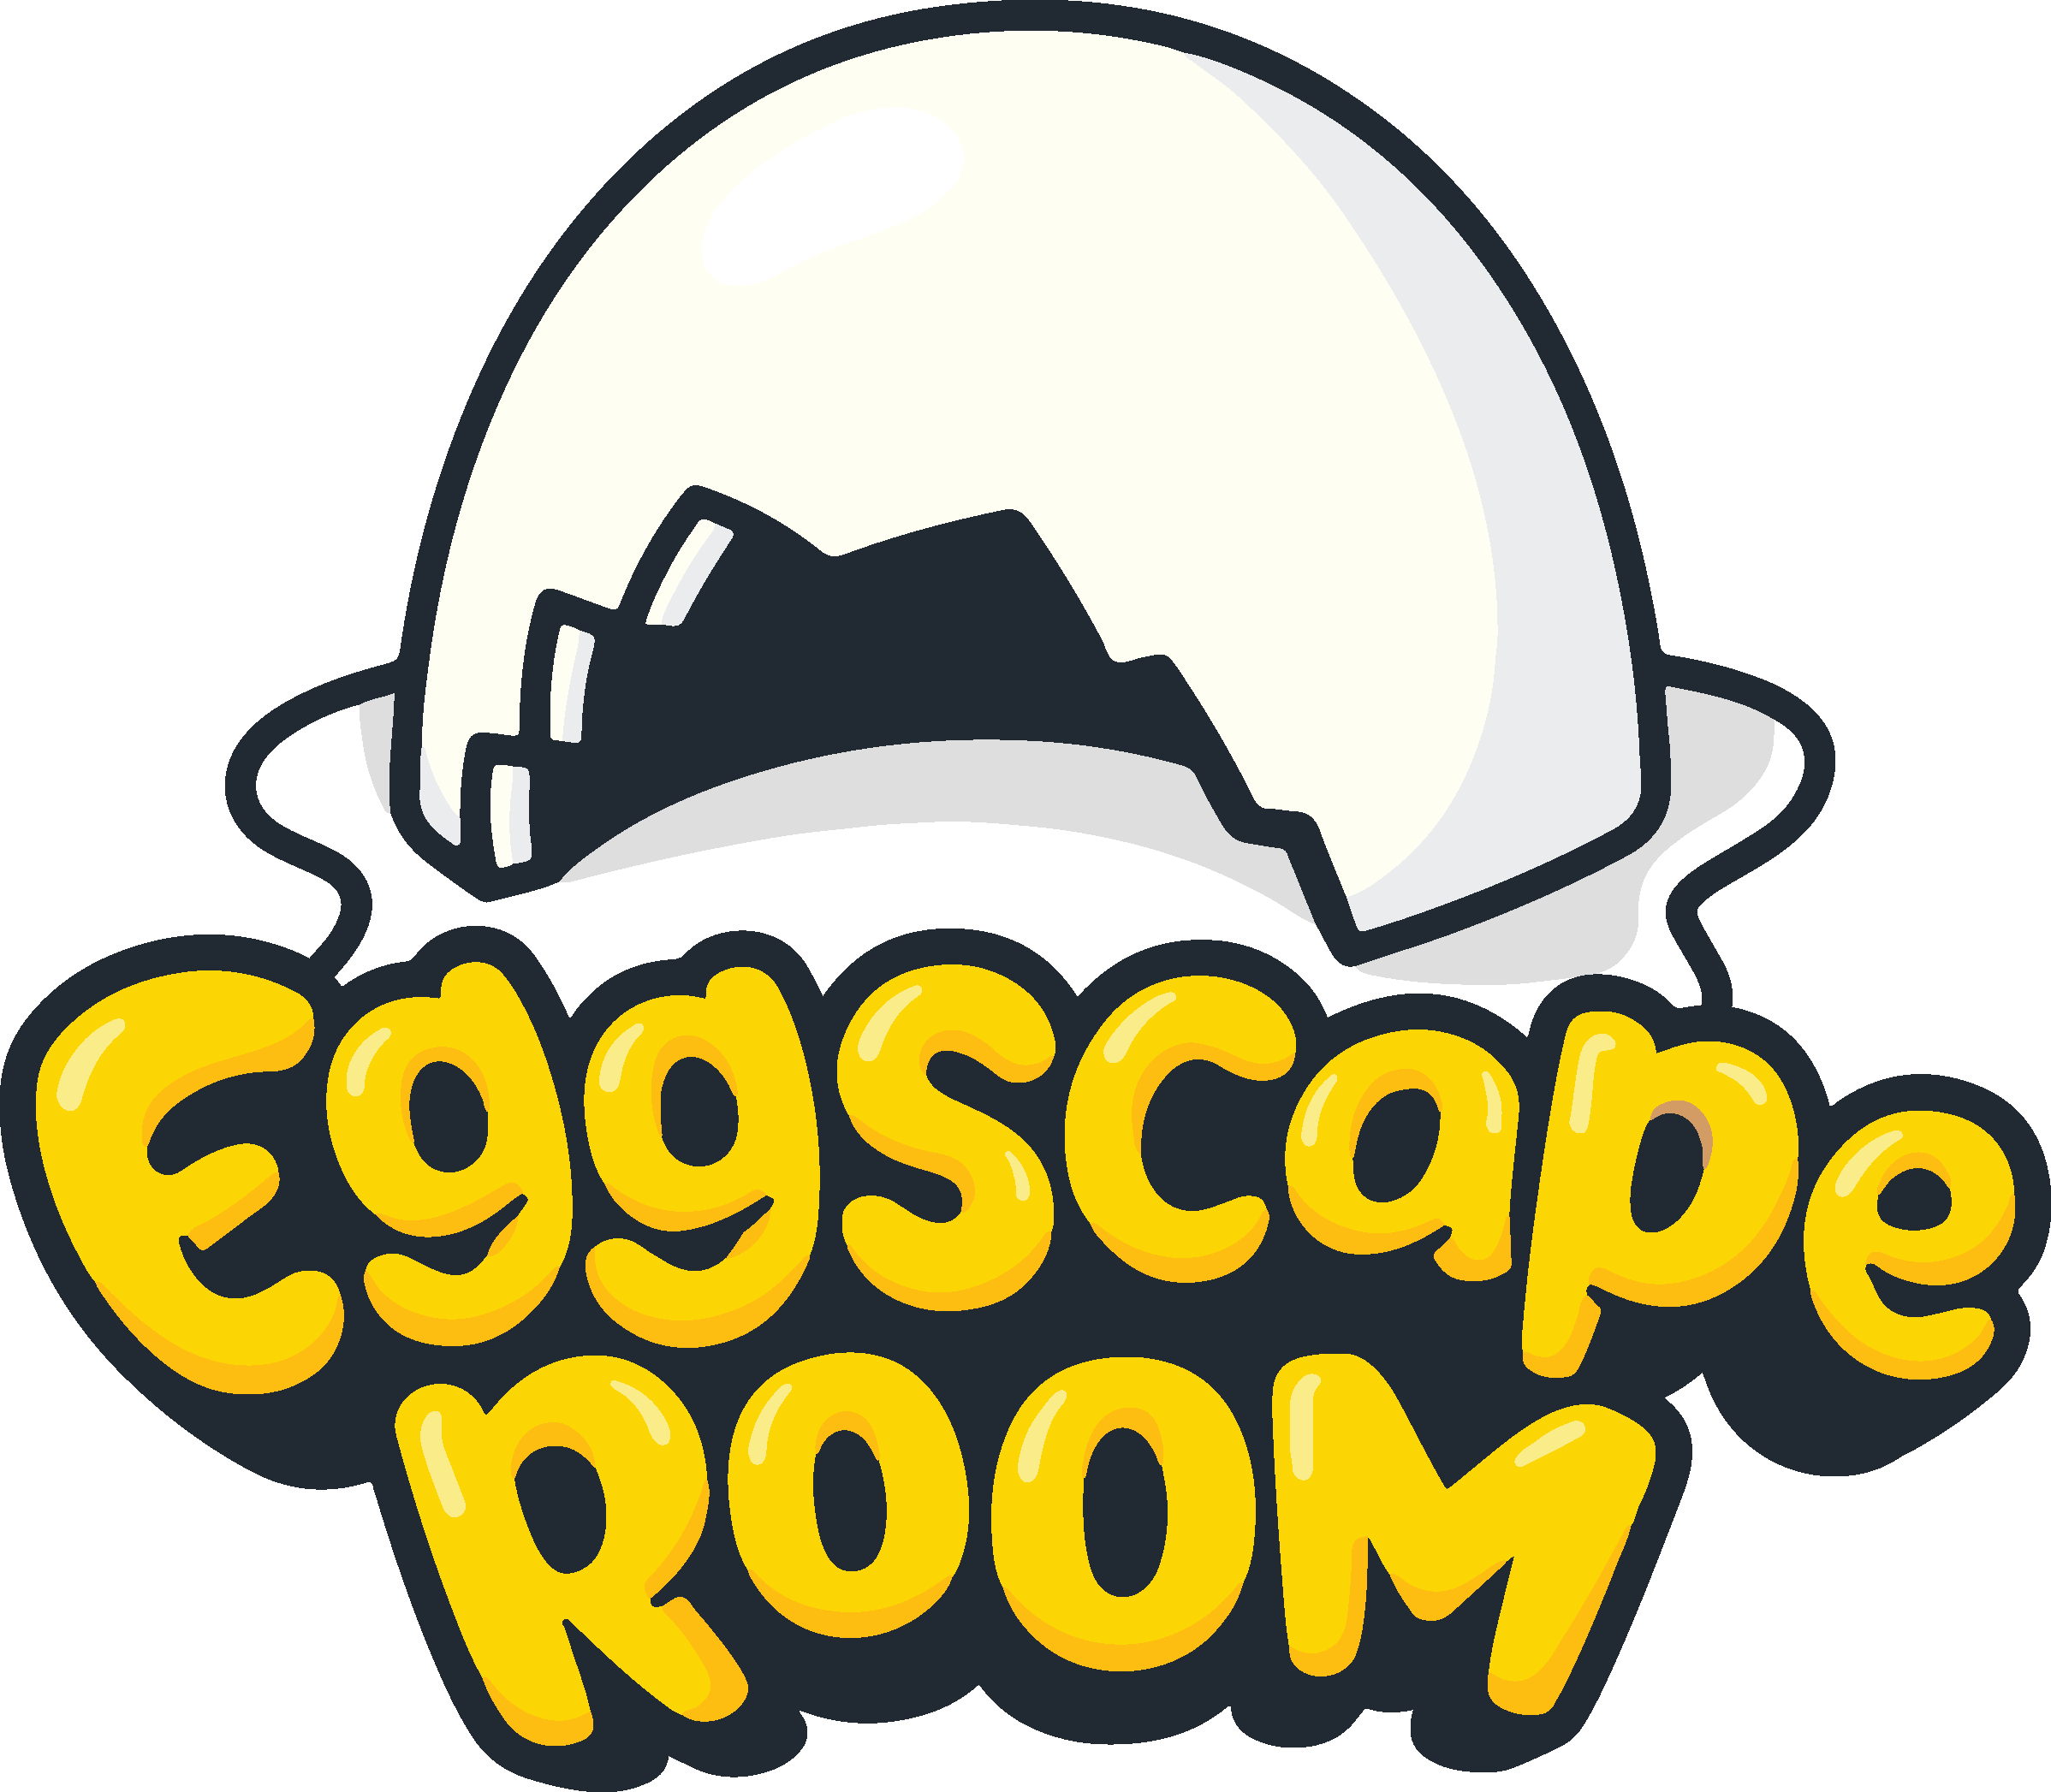 eggscape-room-houston-logo-escape-room